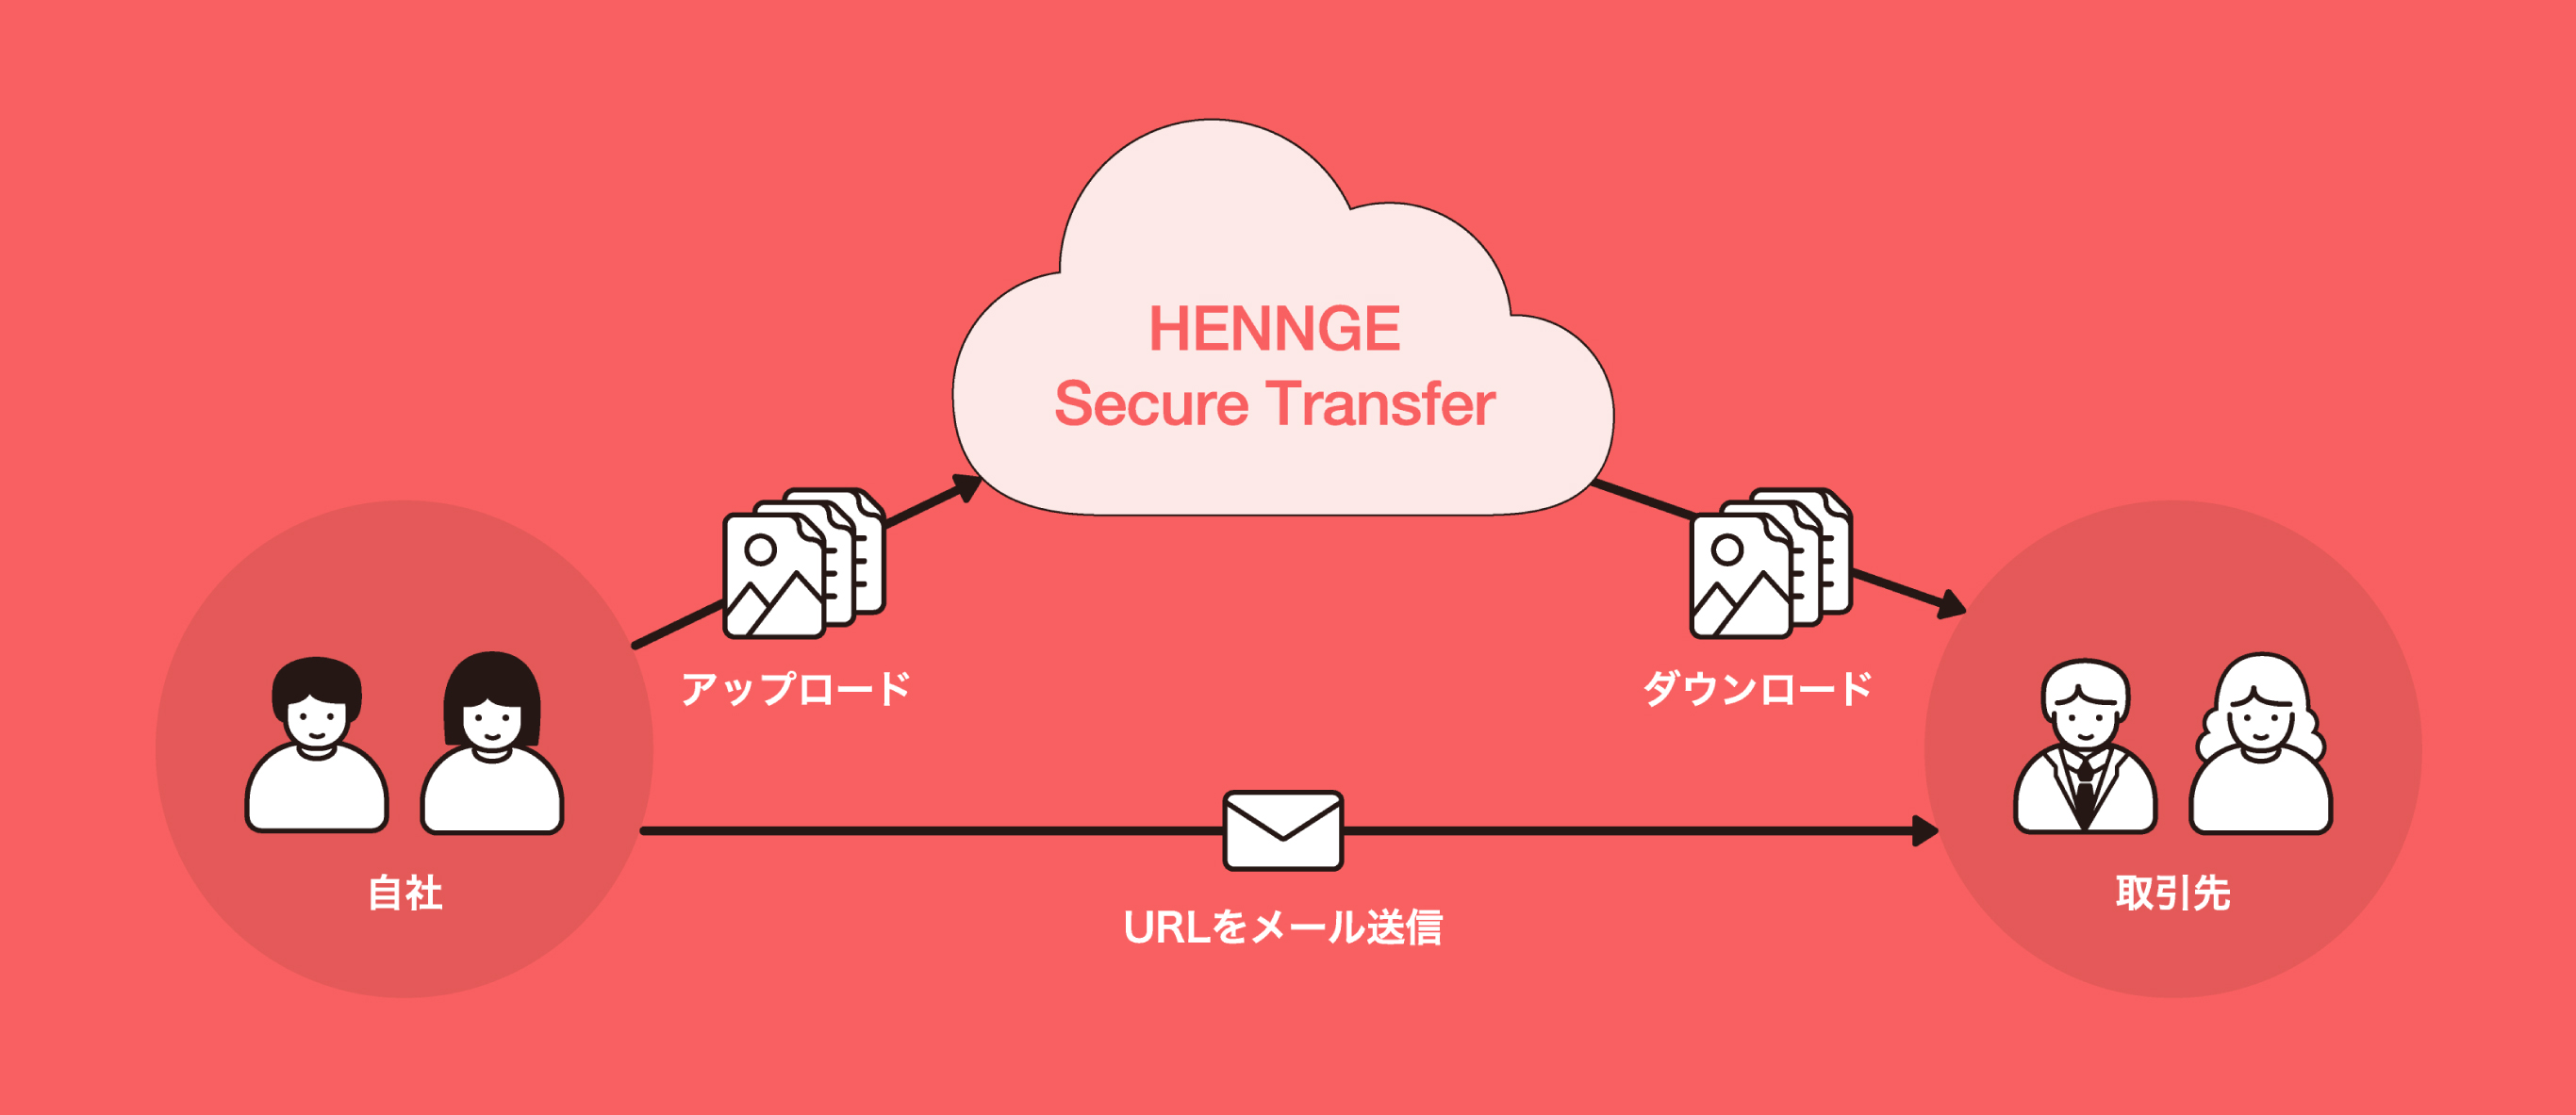 hennge secure transfer とは